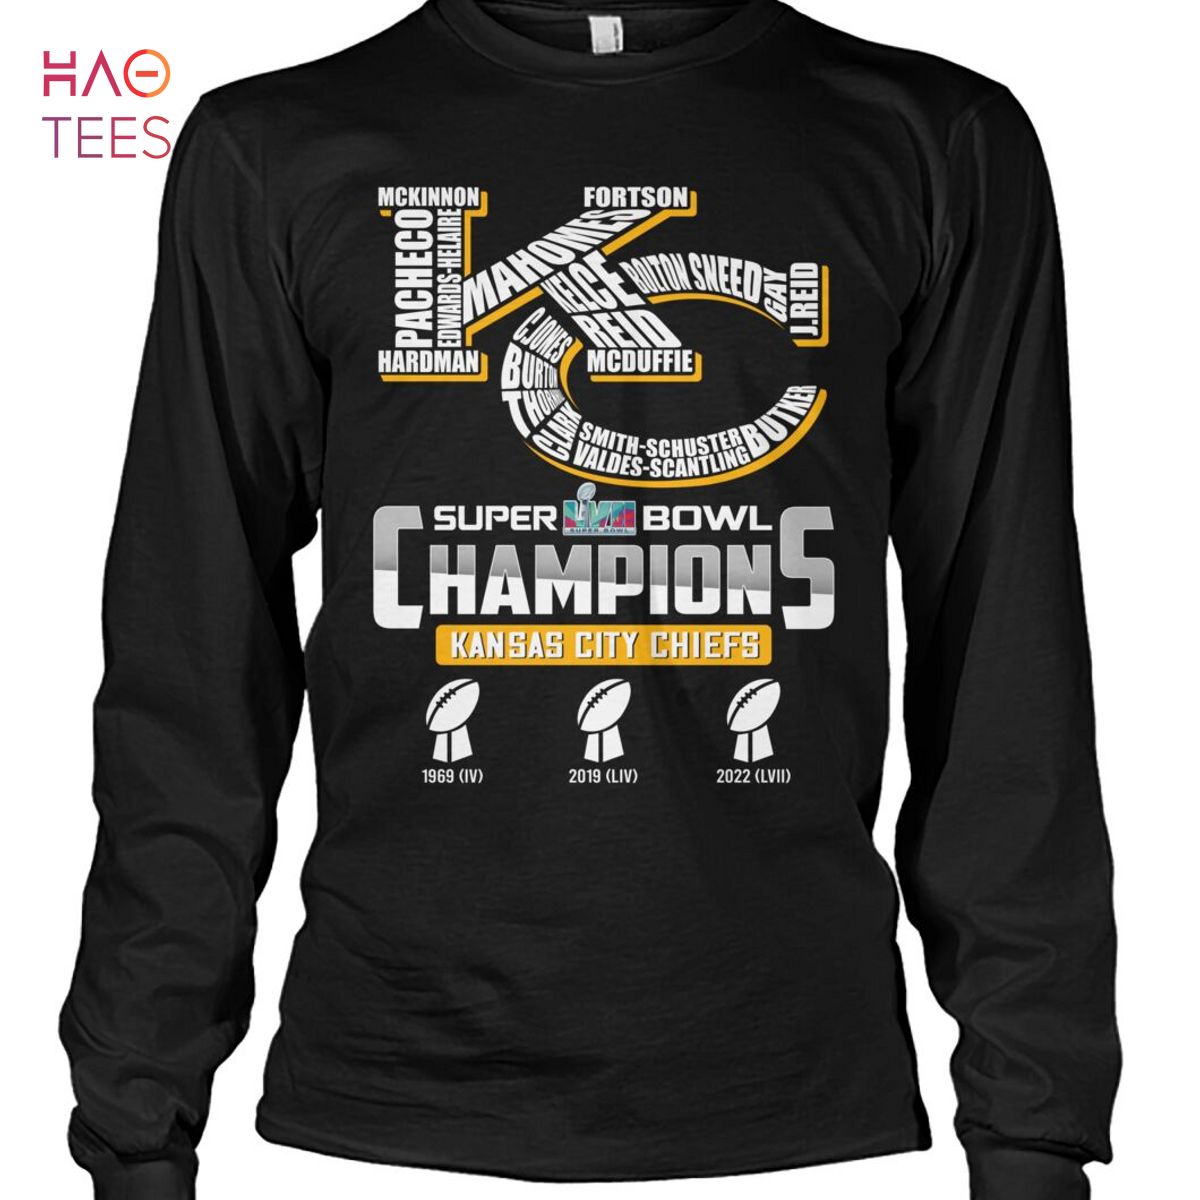 Super LVII Bowl Champions Kansas City Chiefs Best T Shirt